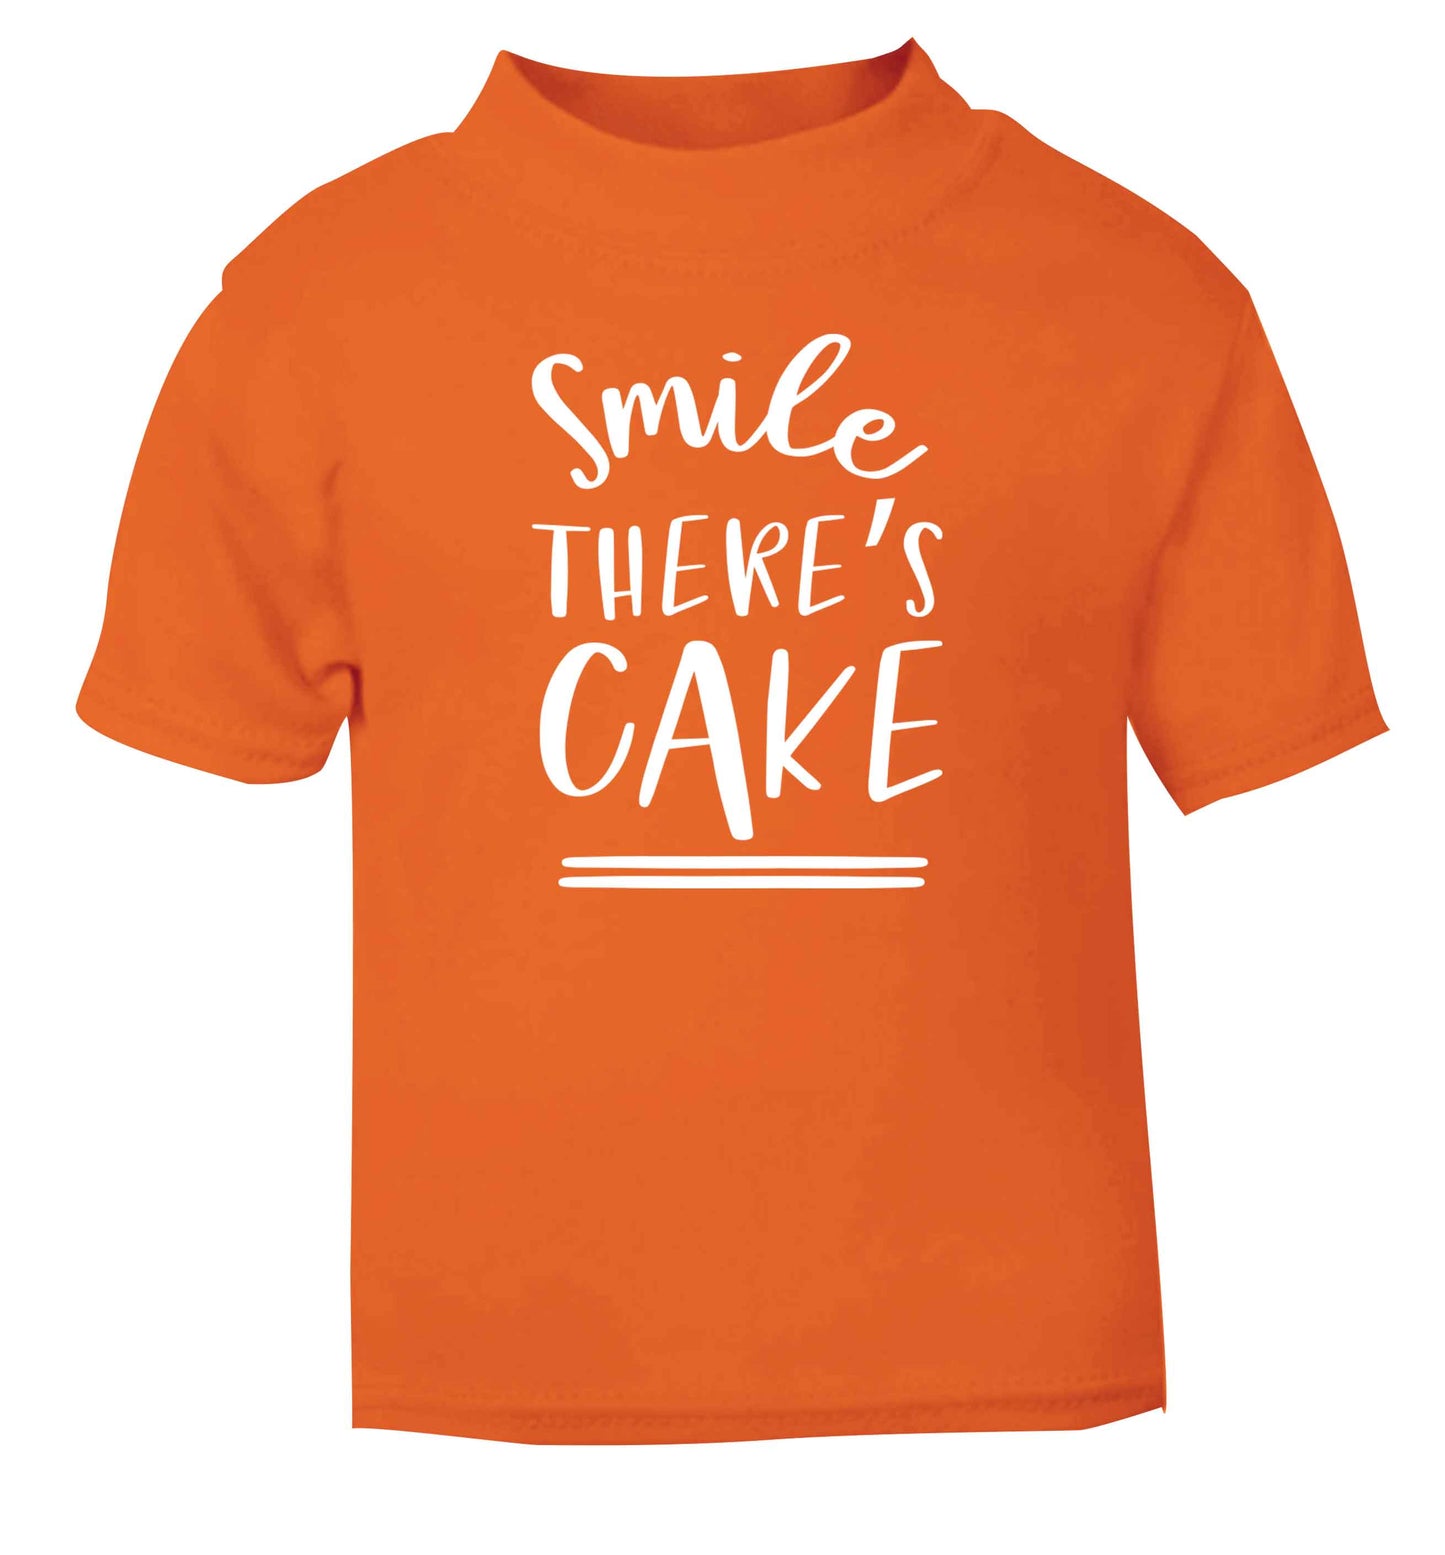 Smile there's cake orange Baby Toddler Tshirt 2 Years